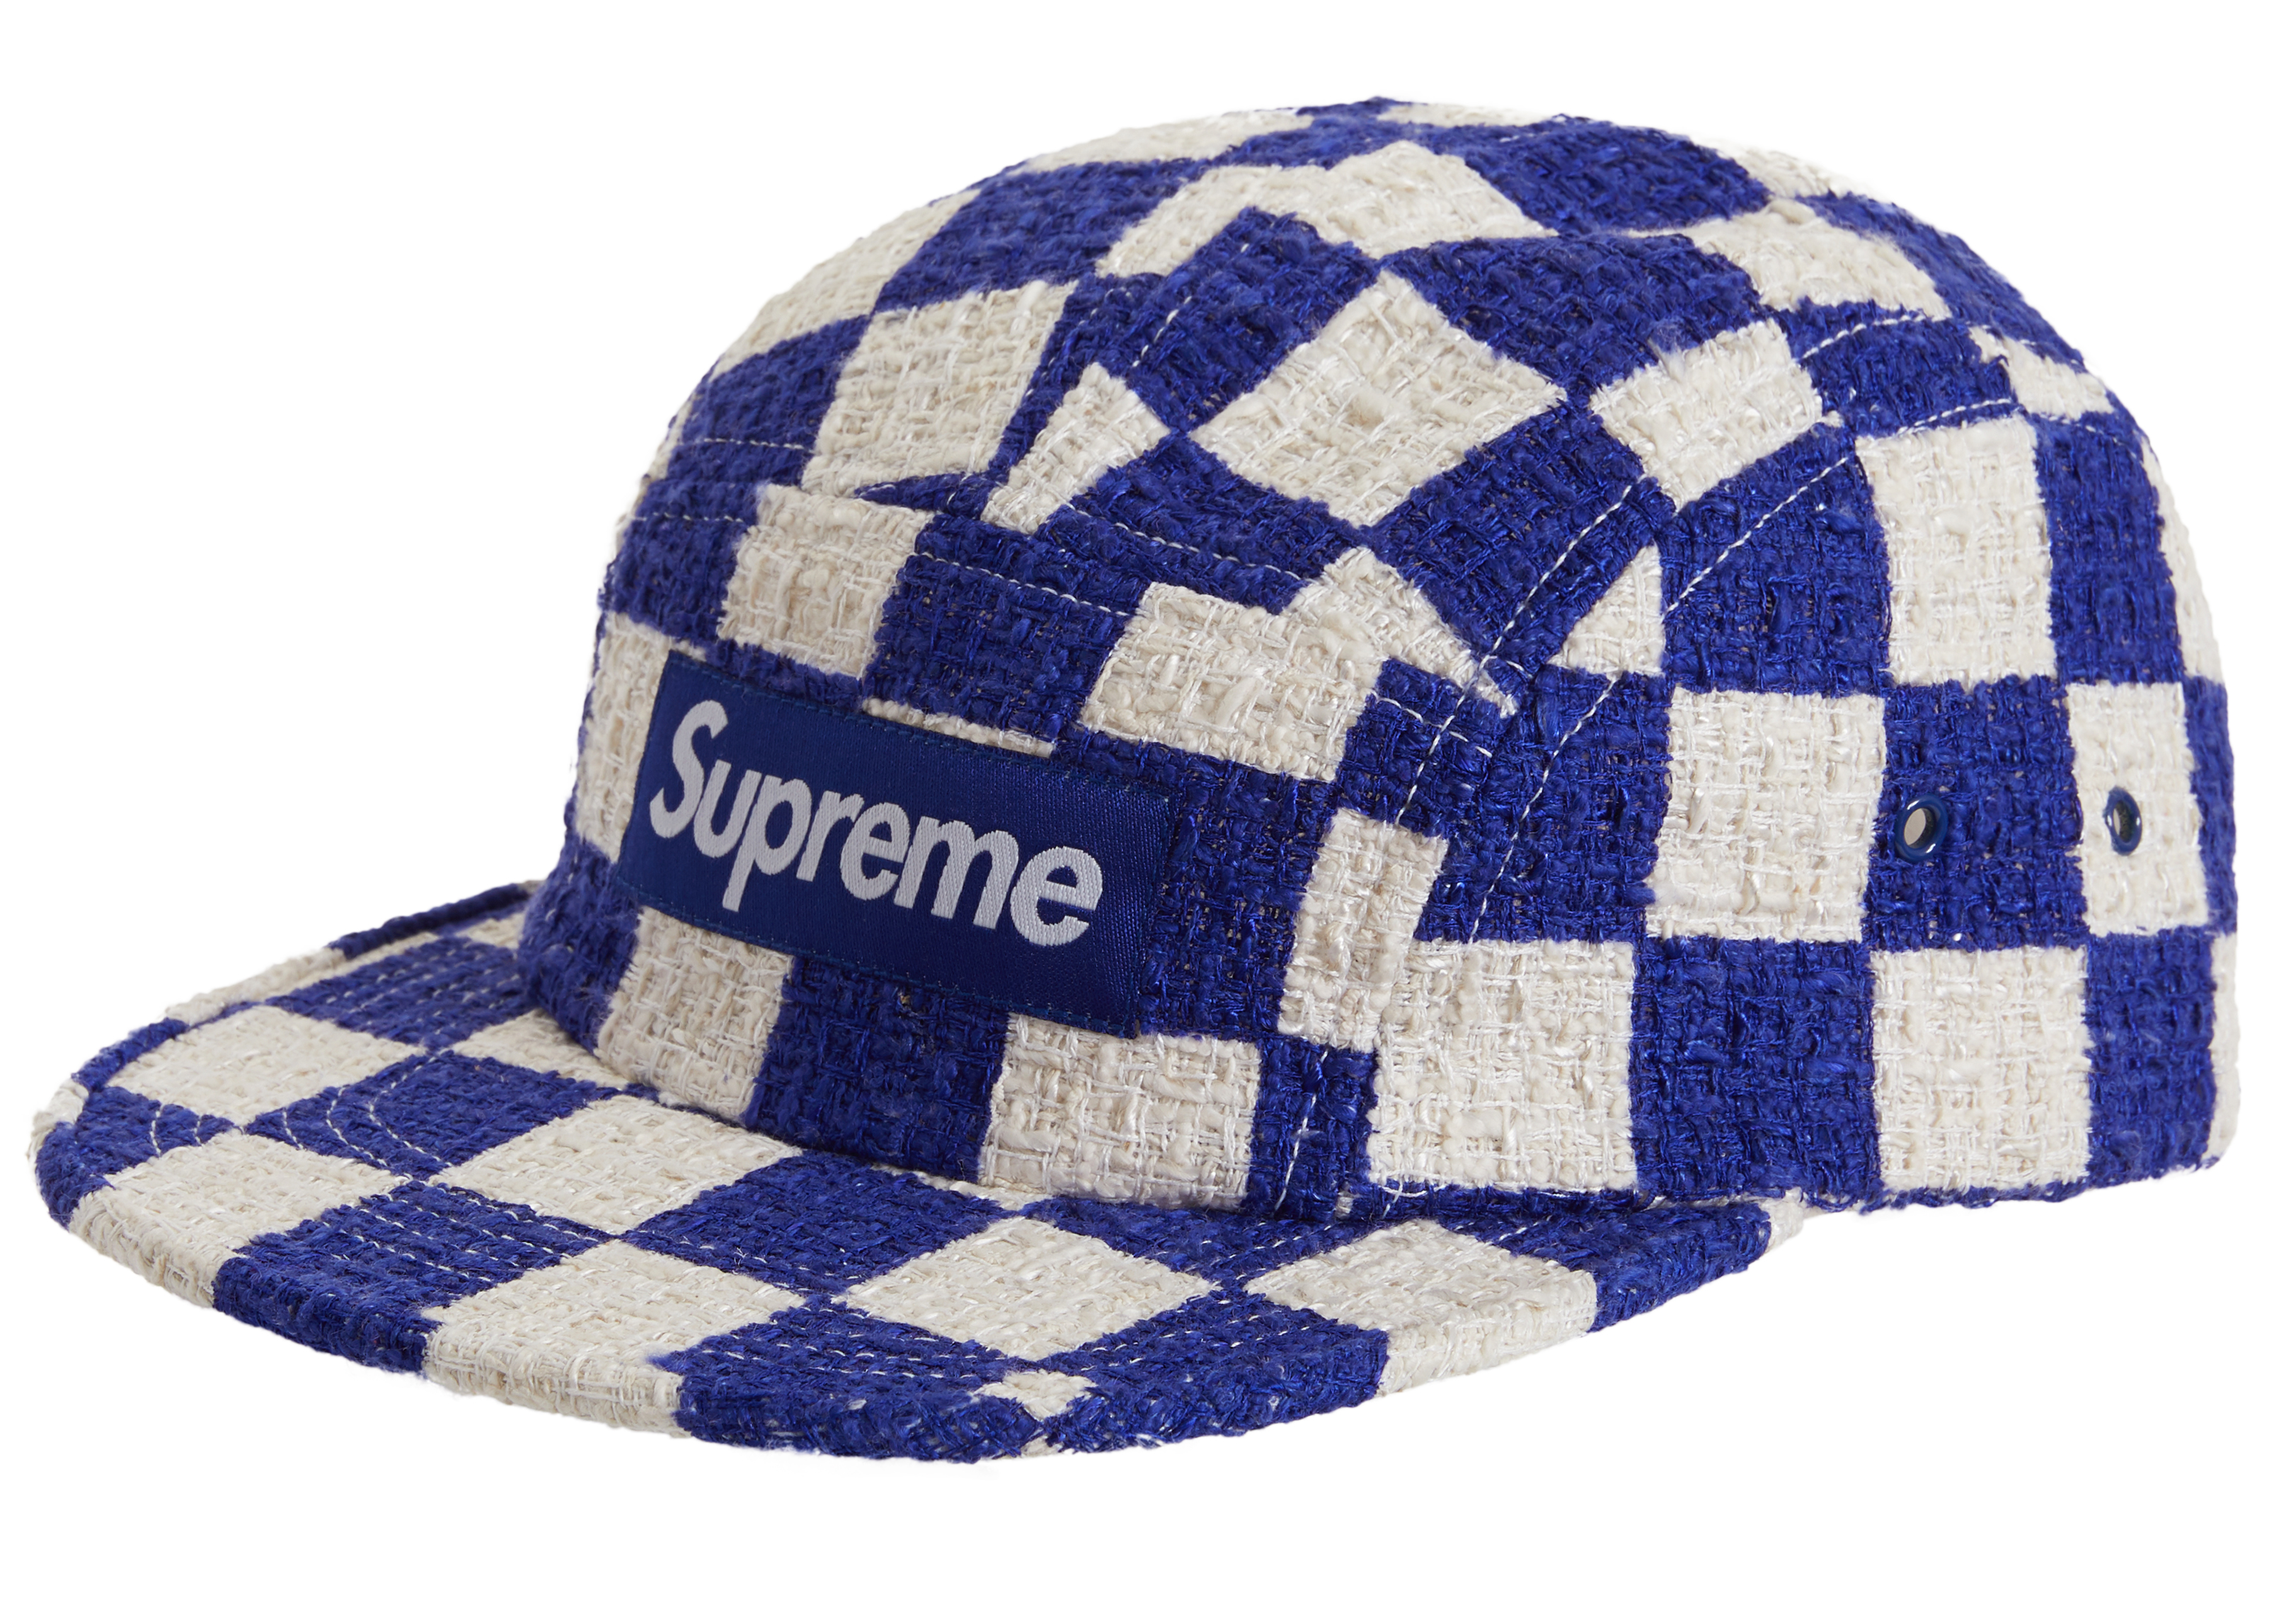 supreme Checkerboard Bouclé Camp Cap 帽子